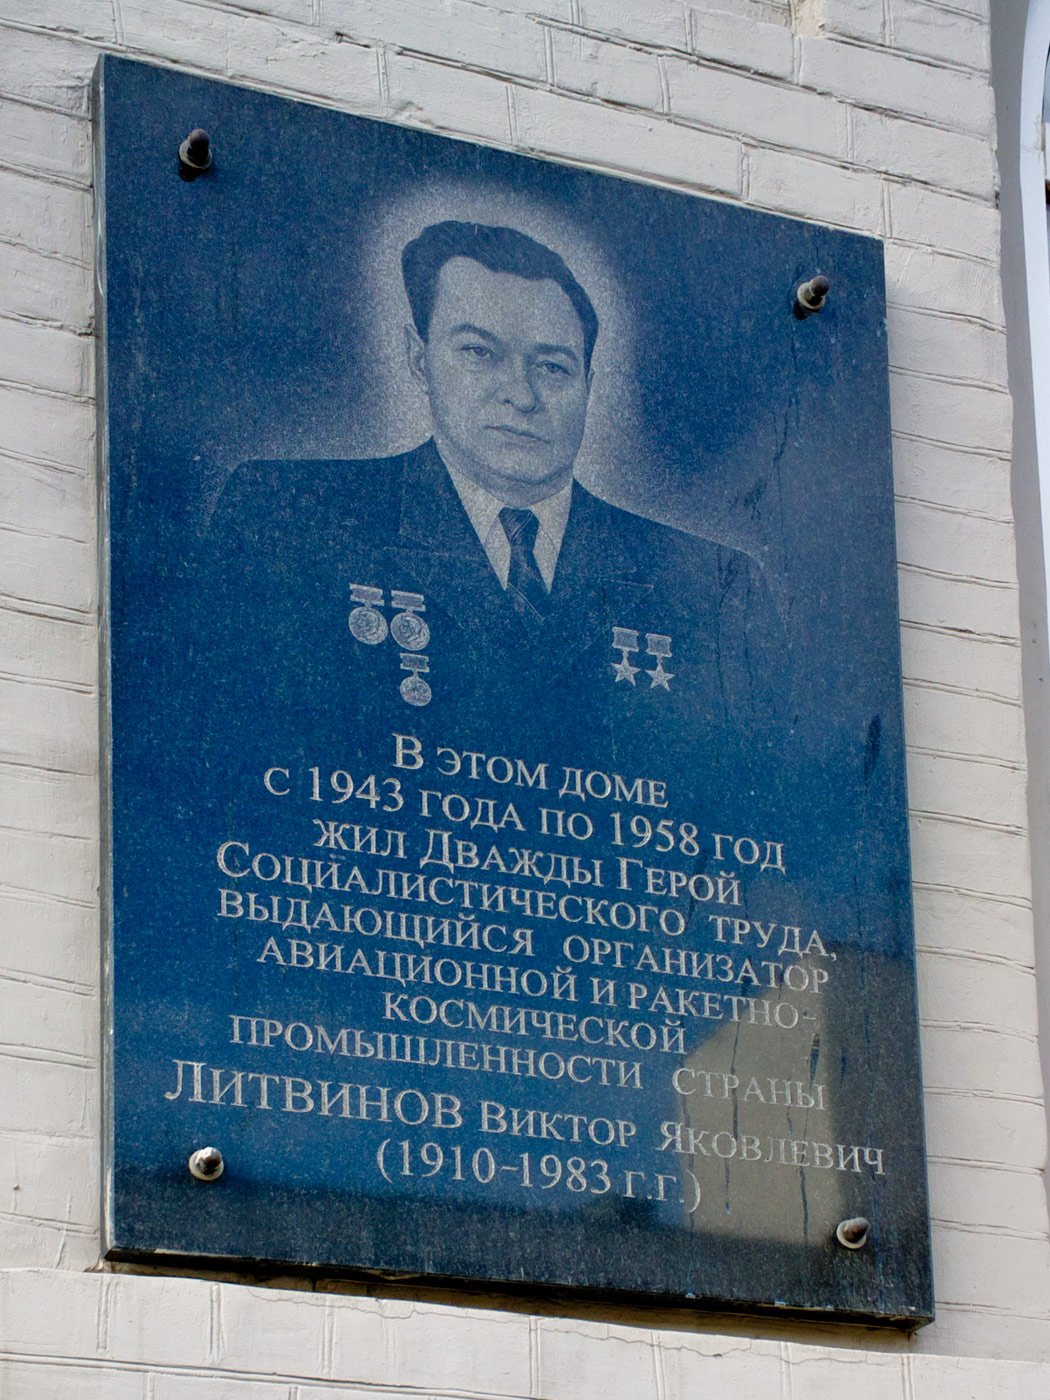 Samara, Улица Фрунзе, 140. Samara — Memorial plaques